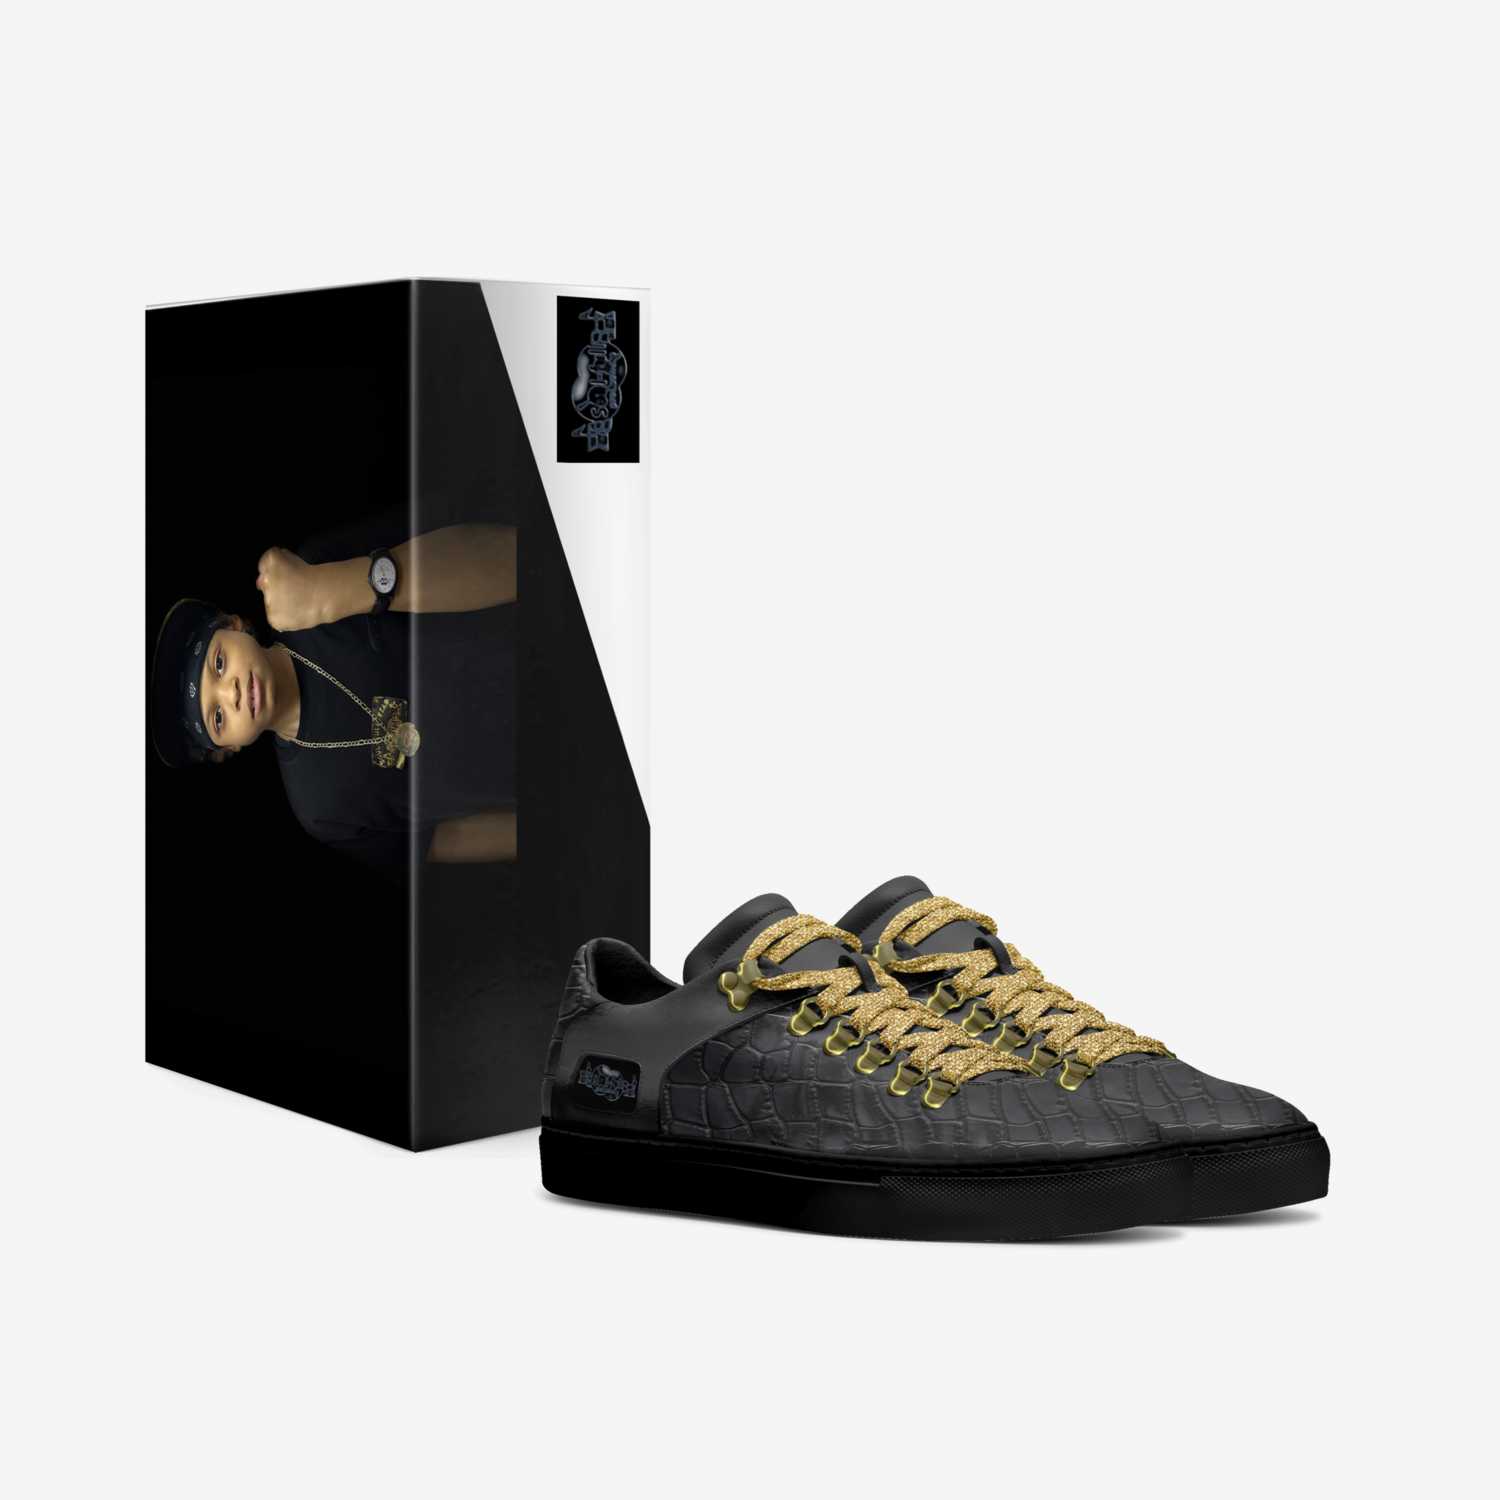 VIDA CRISTIANO  custom made in Italy shoes by Grande Gato | Box view